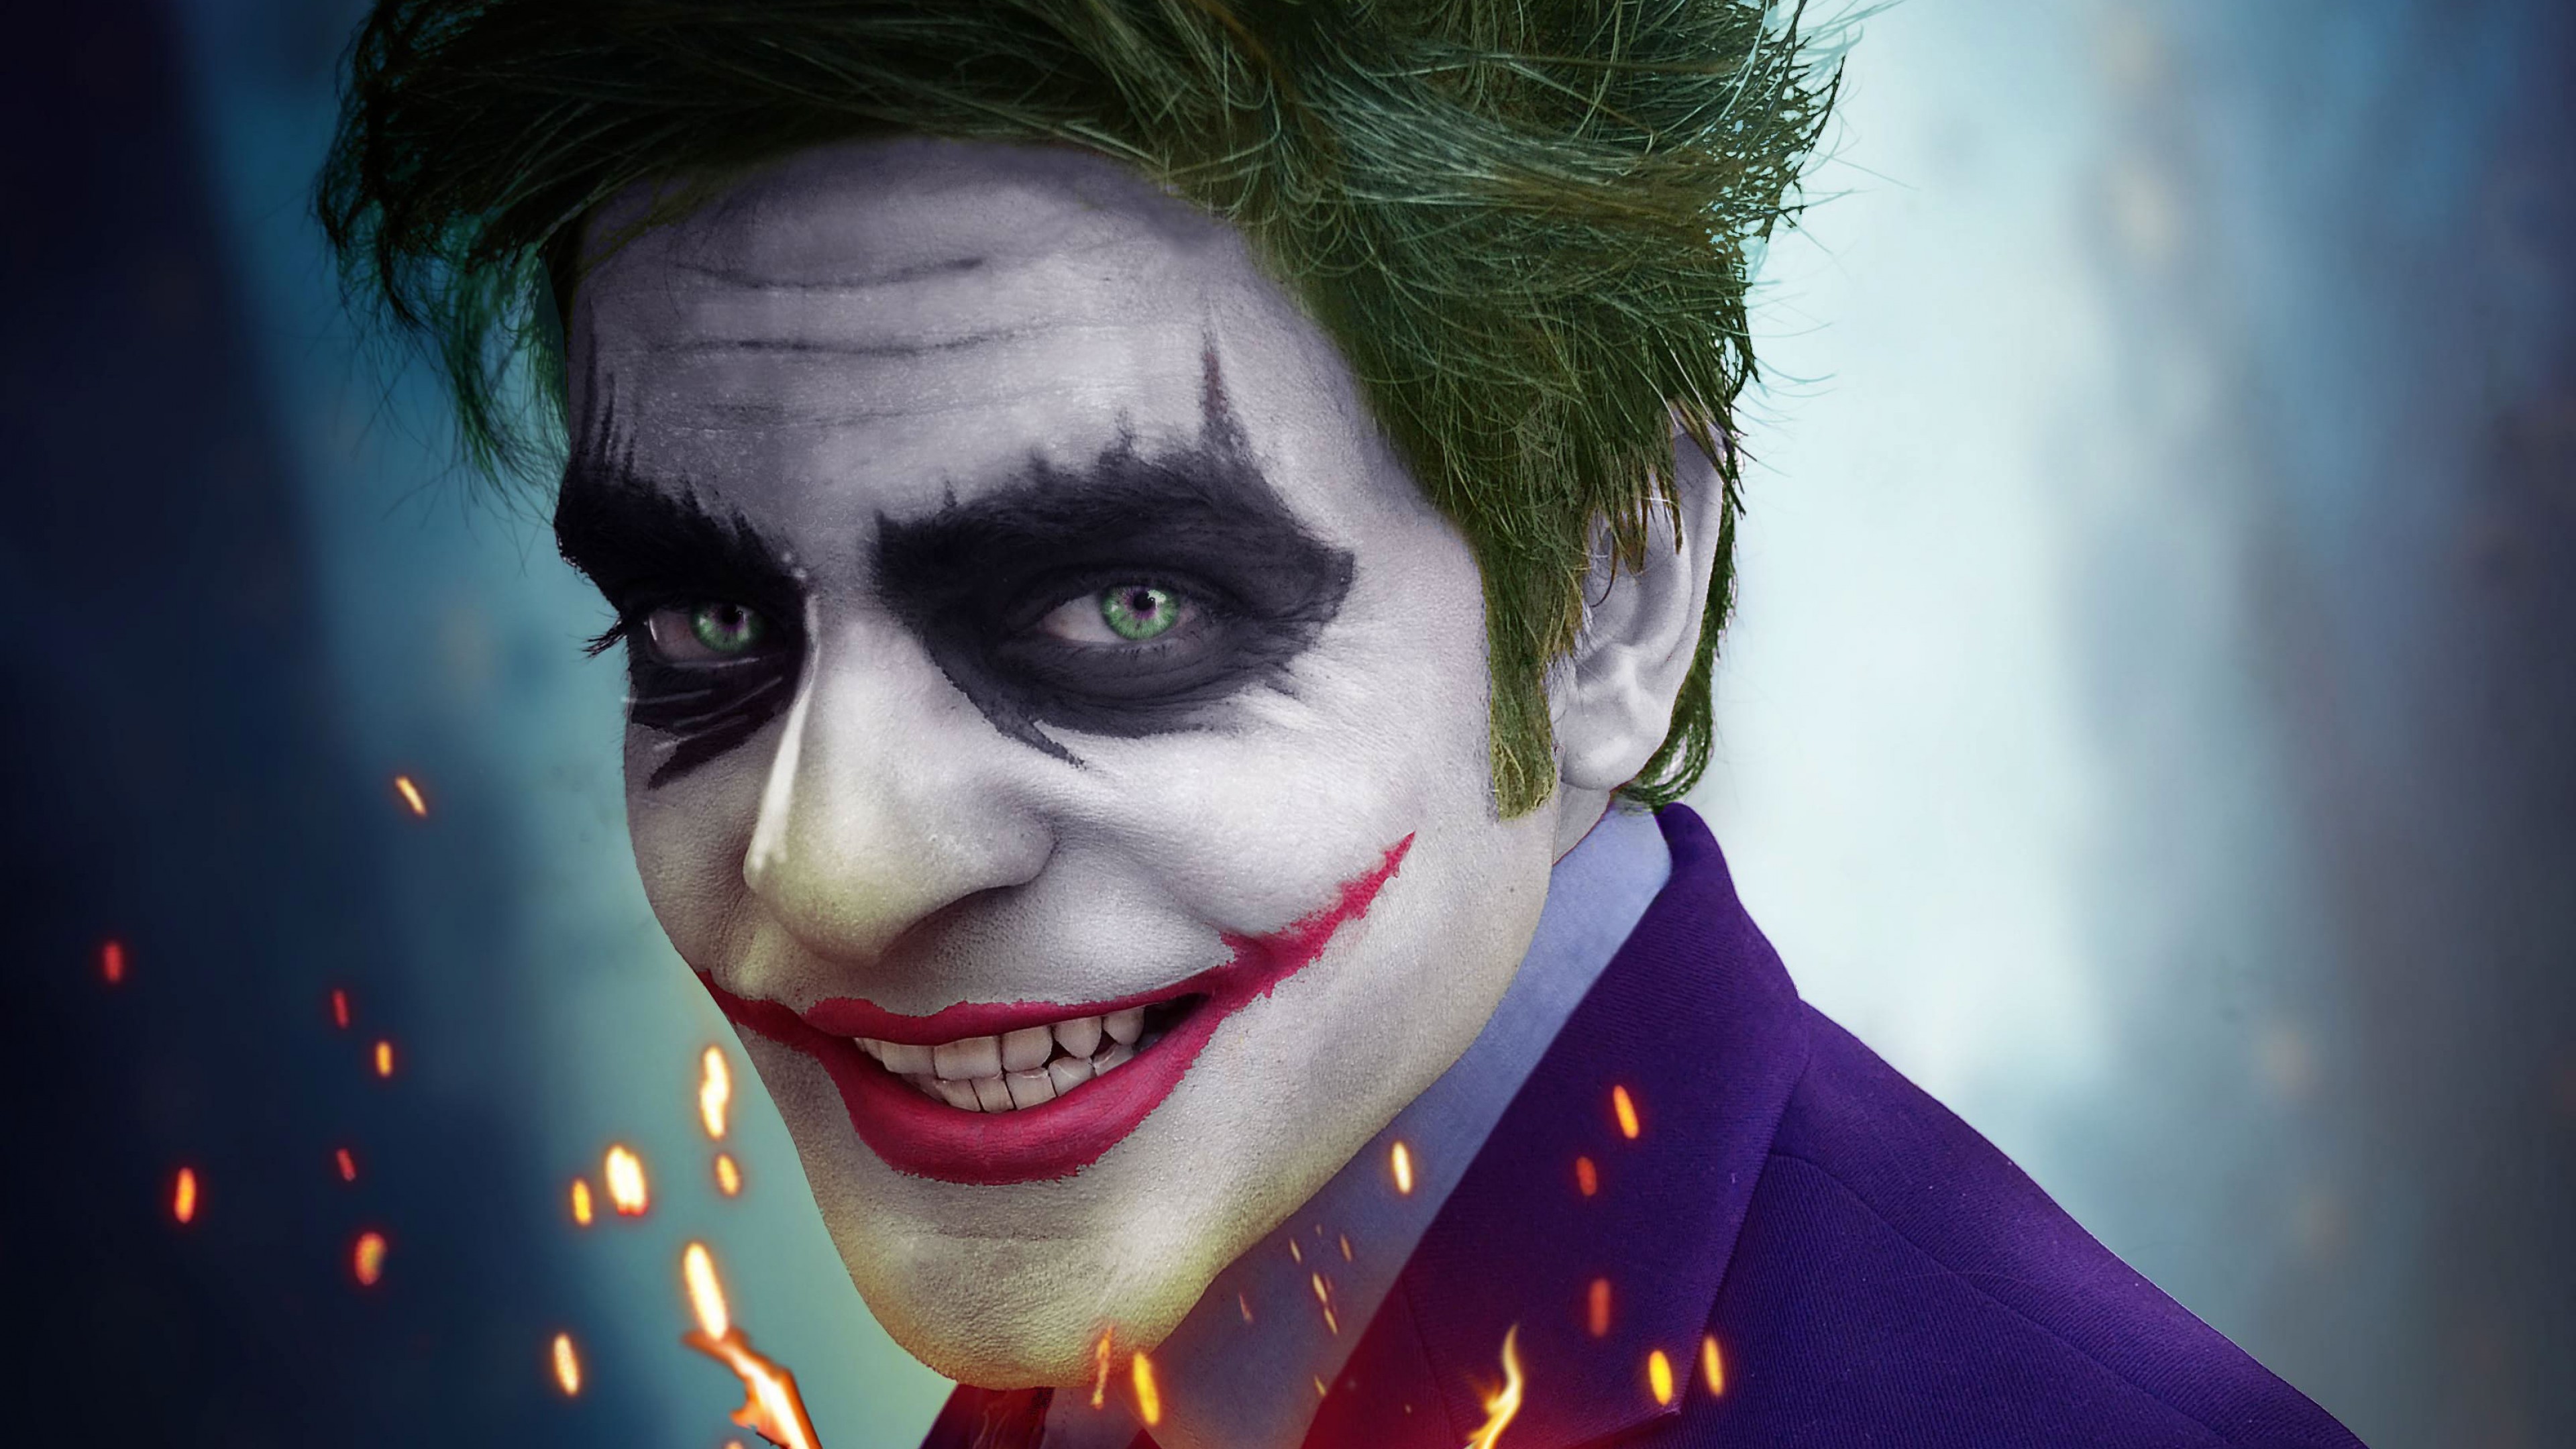 Joker Smile Images Hd - HD Wallpaper 